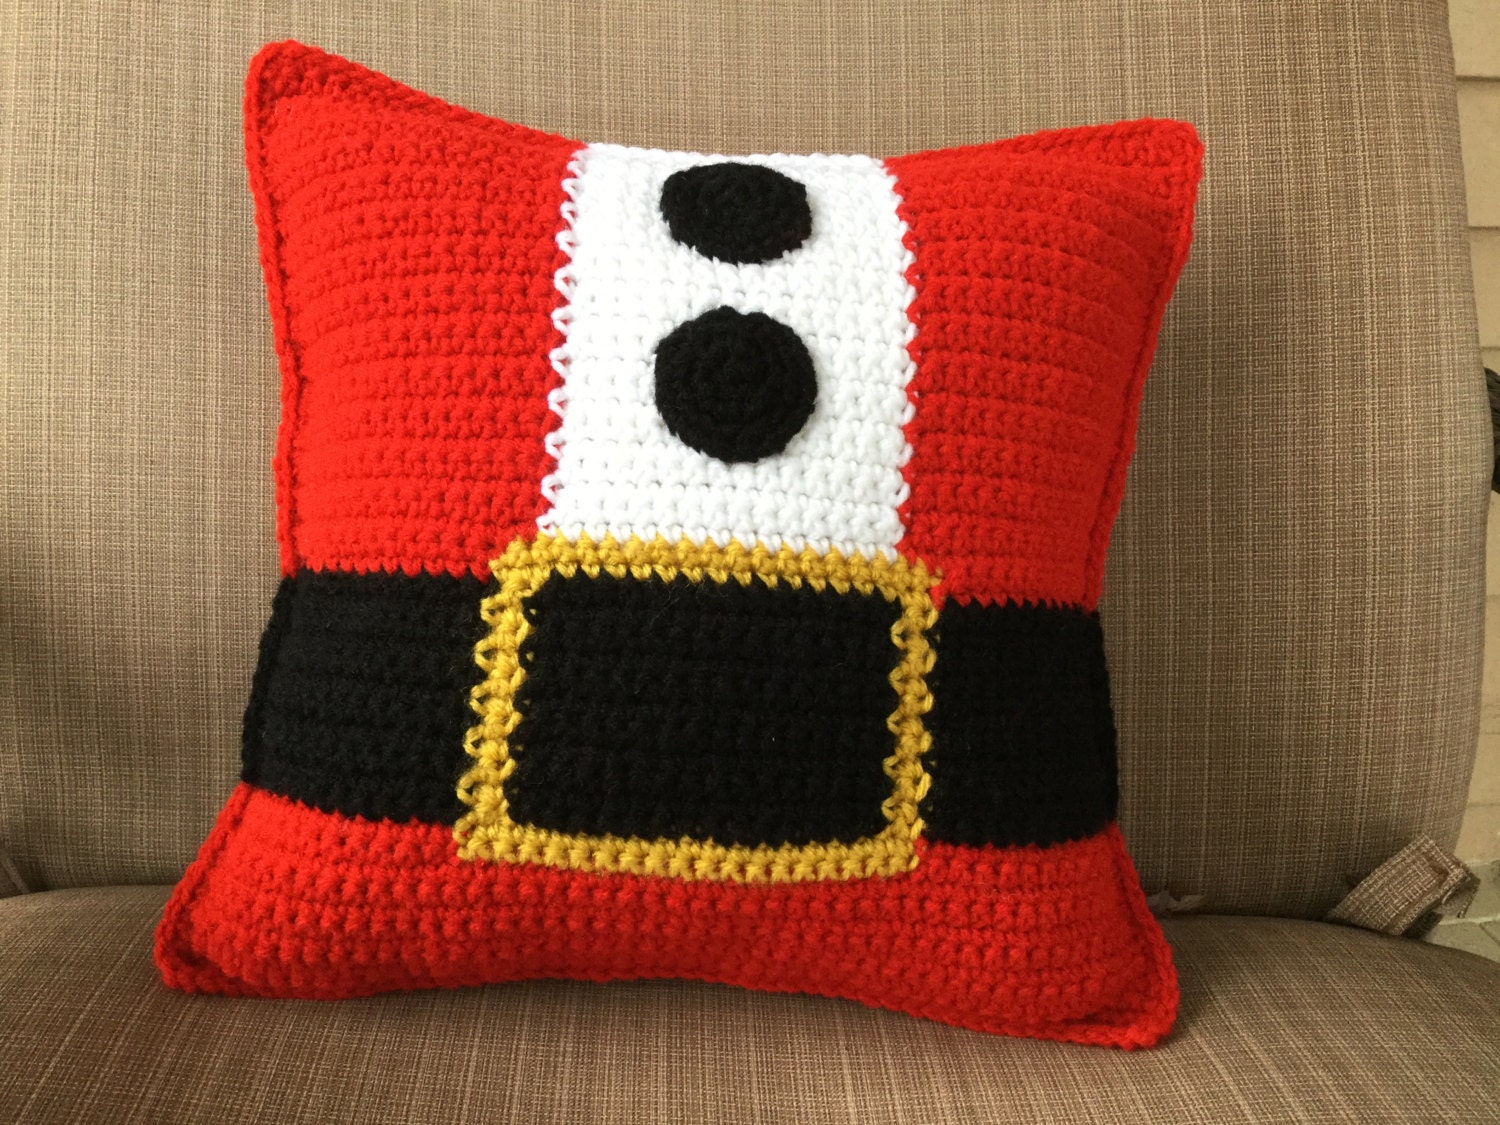 Mr and Mrs Claus Crochet Pillow Crochet Tutorial Pillow | Etsy